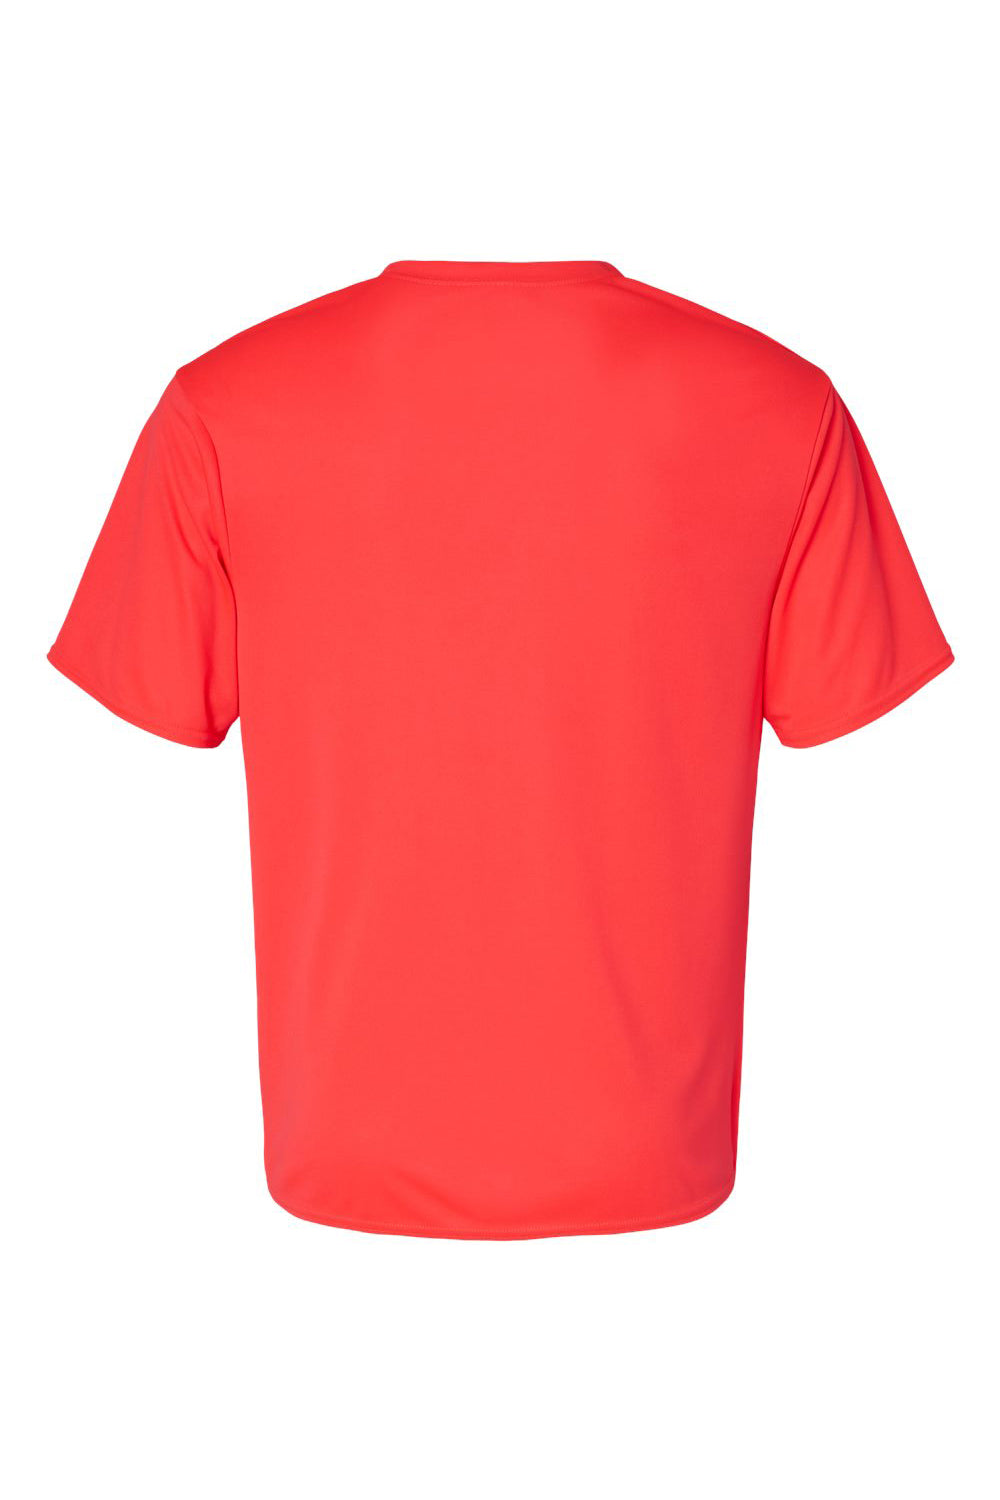 C2 Sport 5100 Mens Performance Moisture Wicking Short Sleeve Crewneck T-Shirt Hot Coral Pink Flat Back